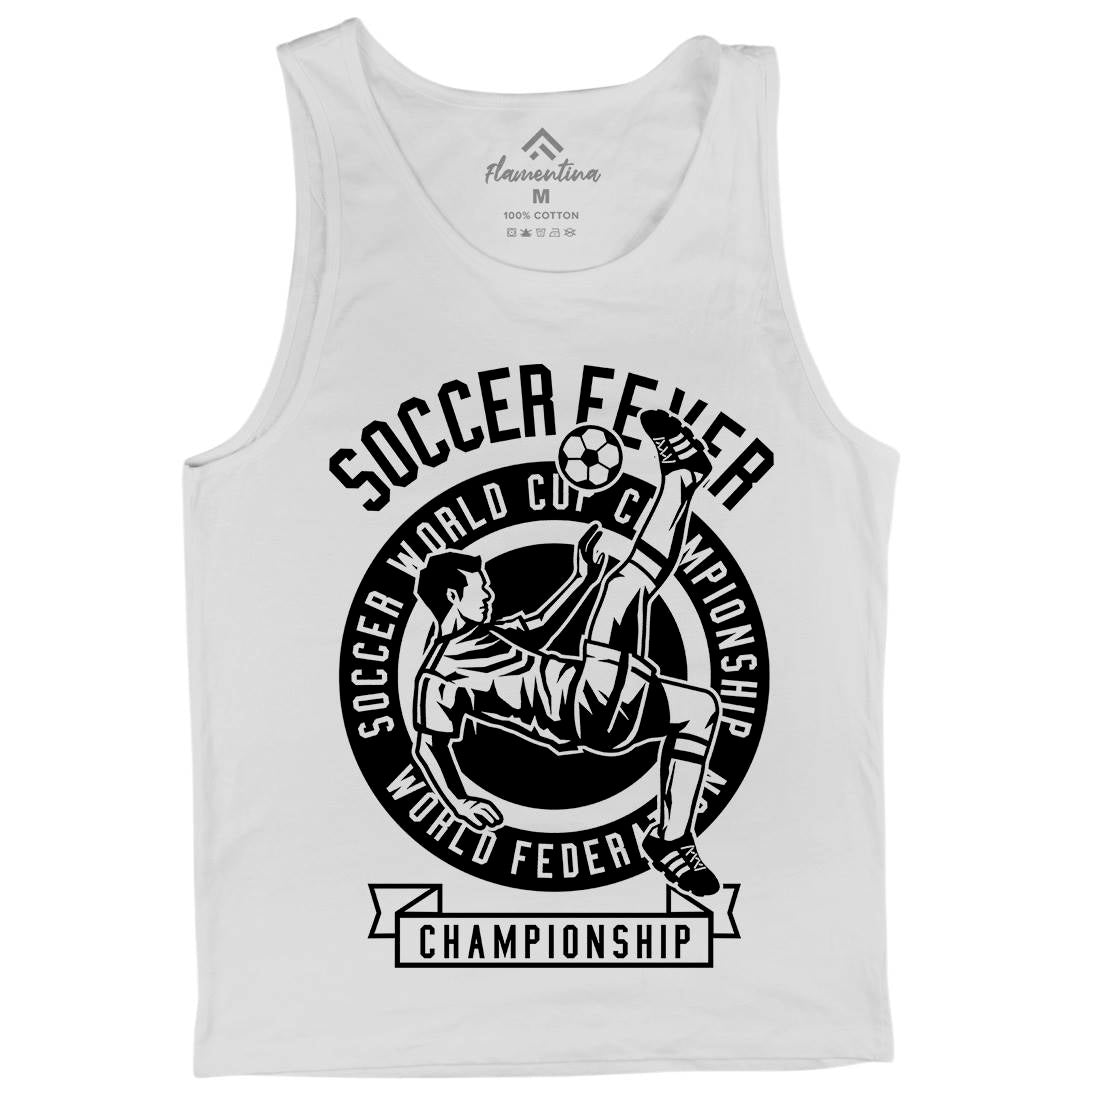 Soccer Fever Mens Tank Top Vest Sport B634